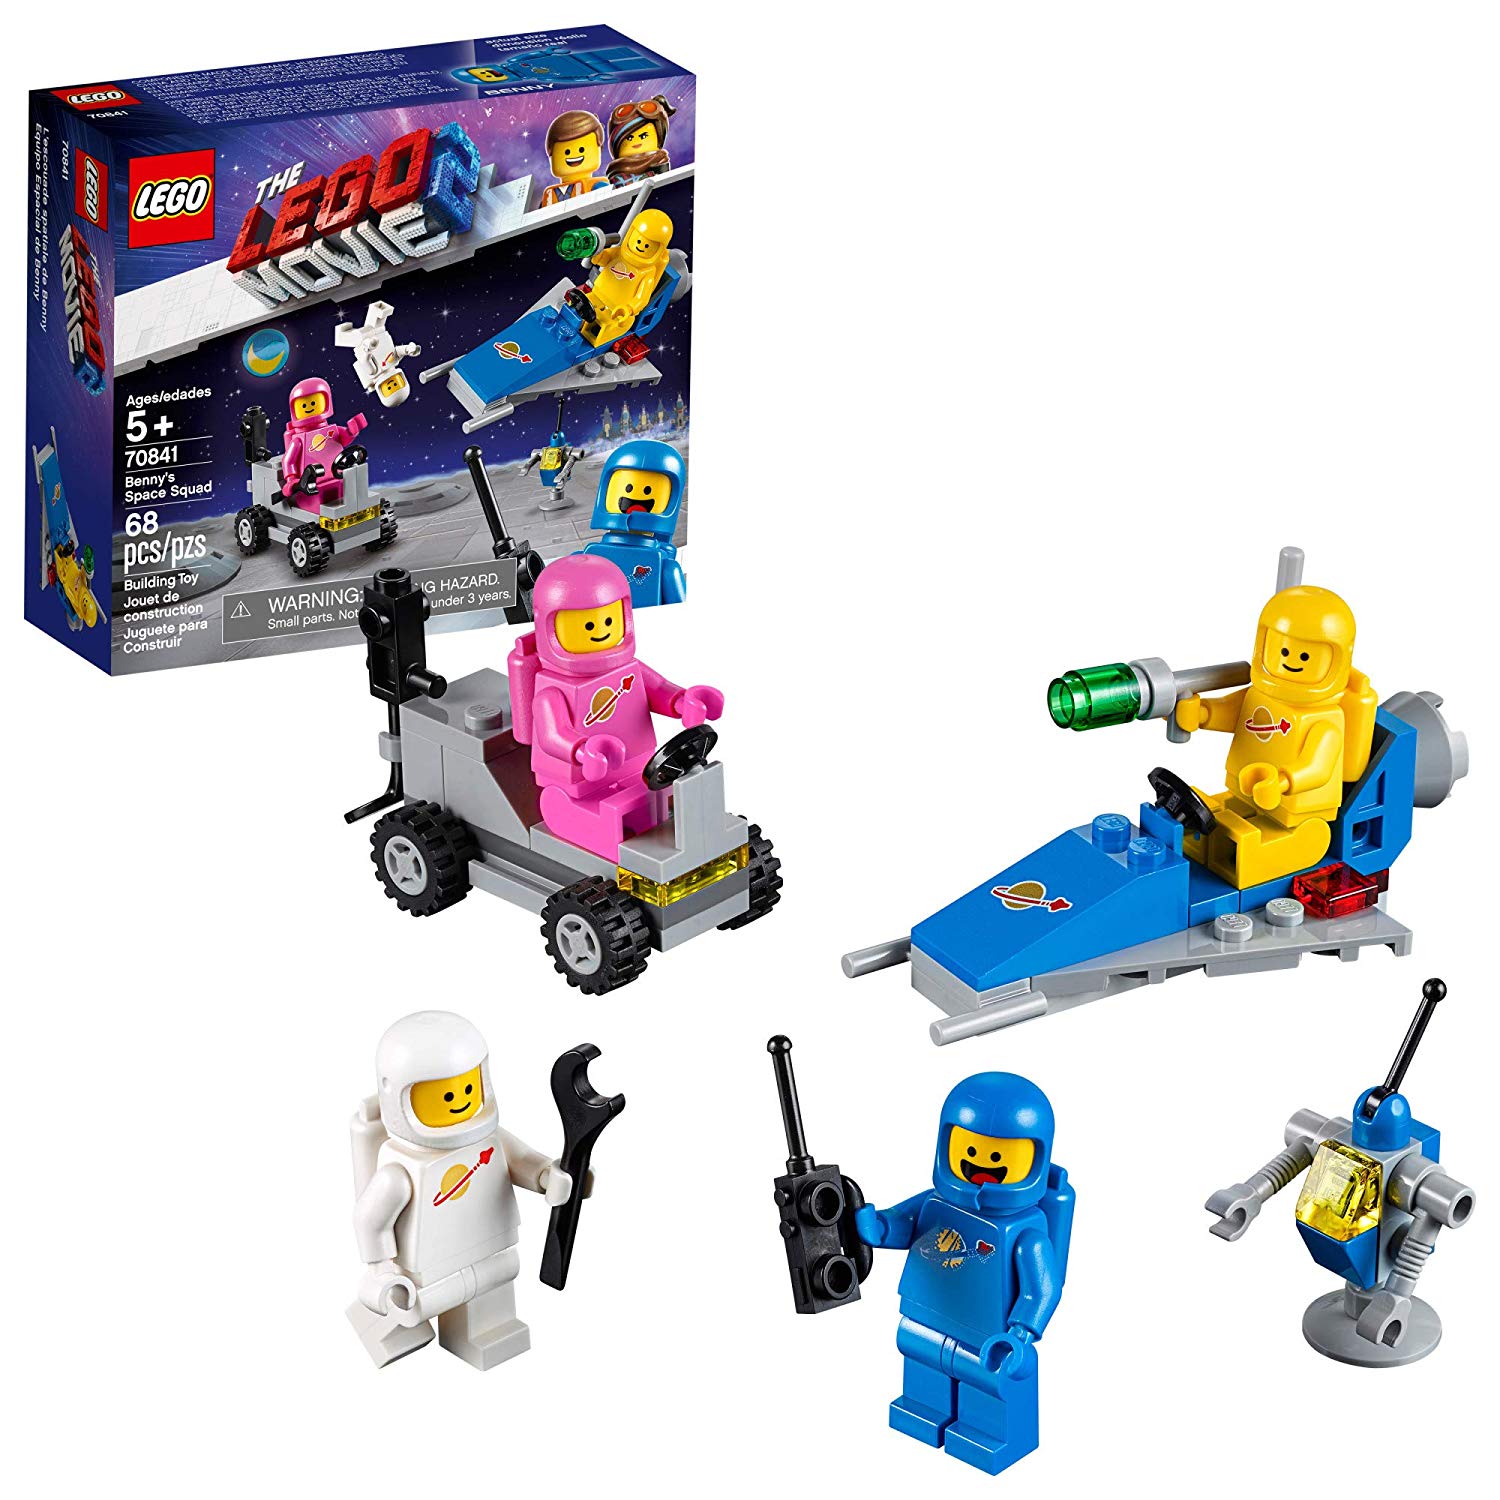 Movie Lego The Lego 2 Bennys Space Squad 70841 Figure Set New 2019 (68 Piec